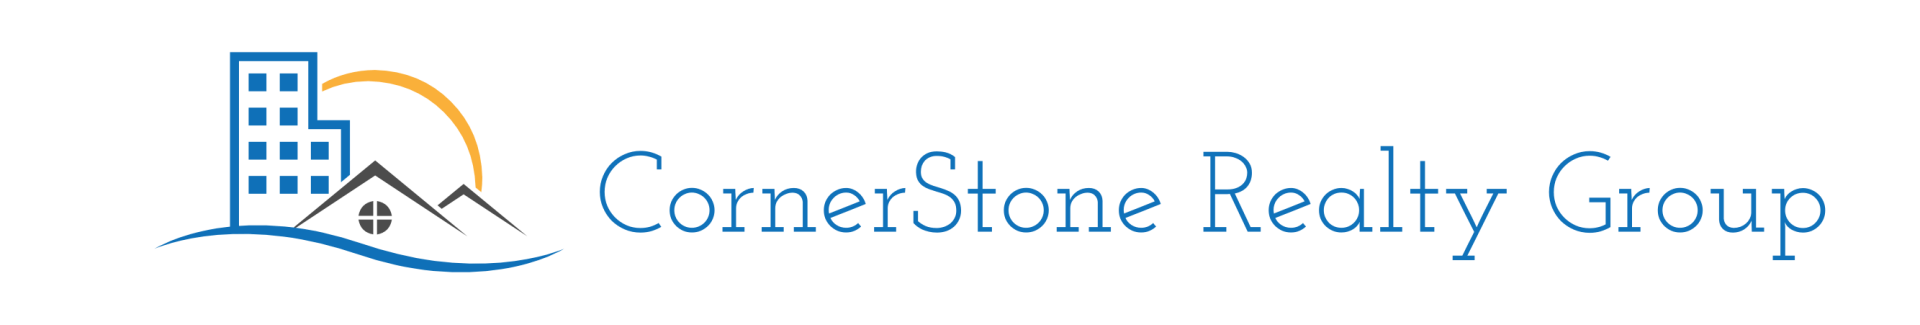 Cornerstone Realty Group logo